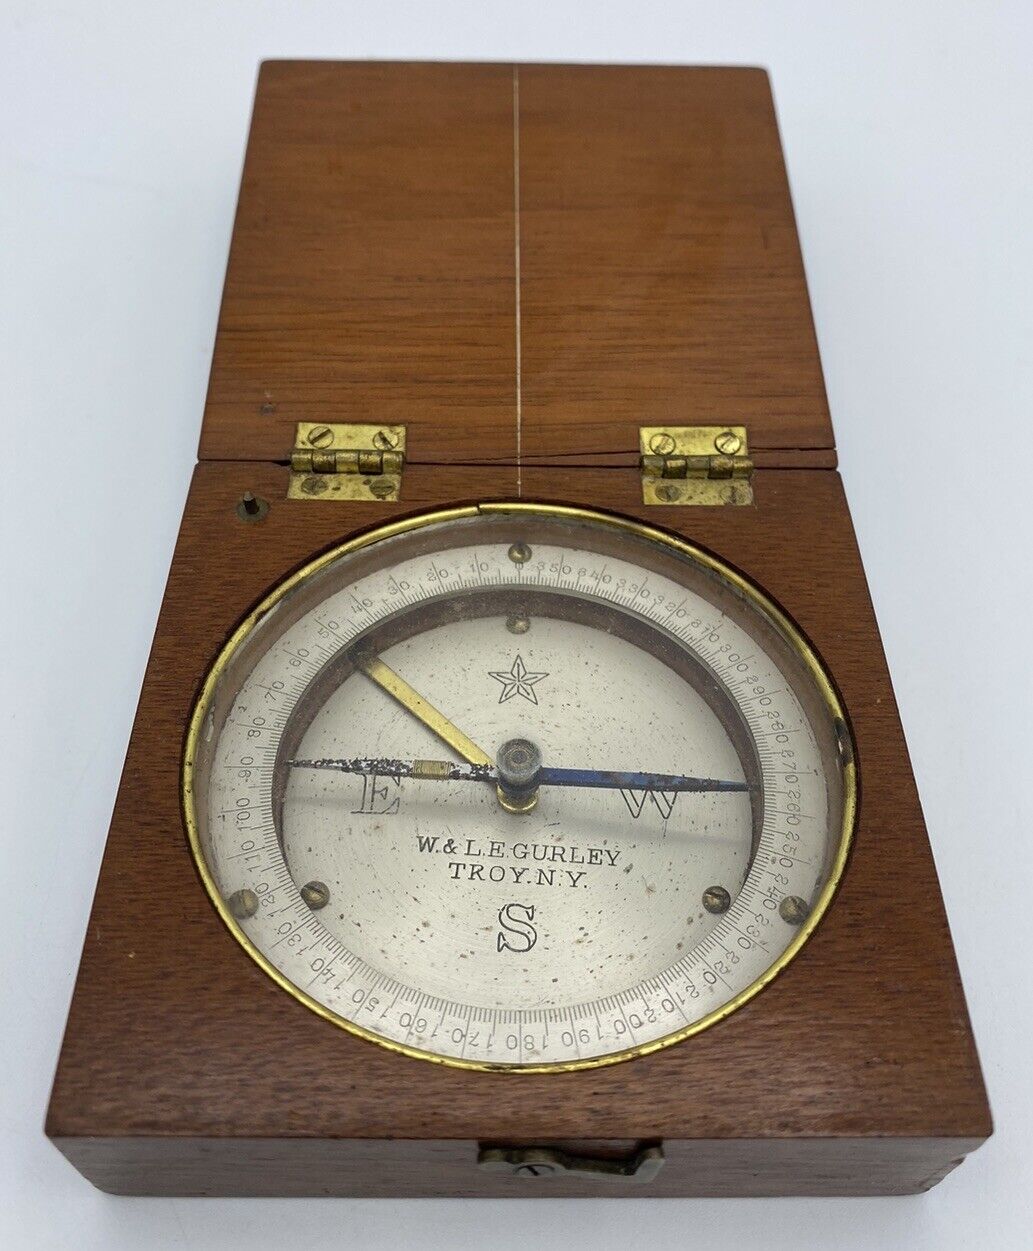 Vintage/ Antique W & L.E. GURLEY Compass In Wood Box Engineer Surveyor TROY N.Y.